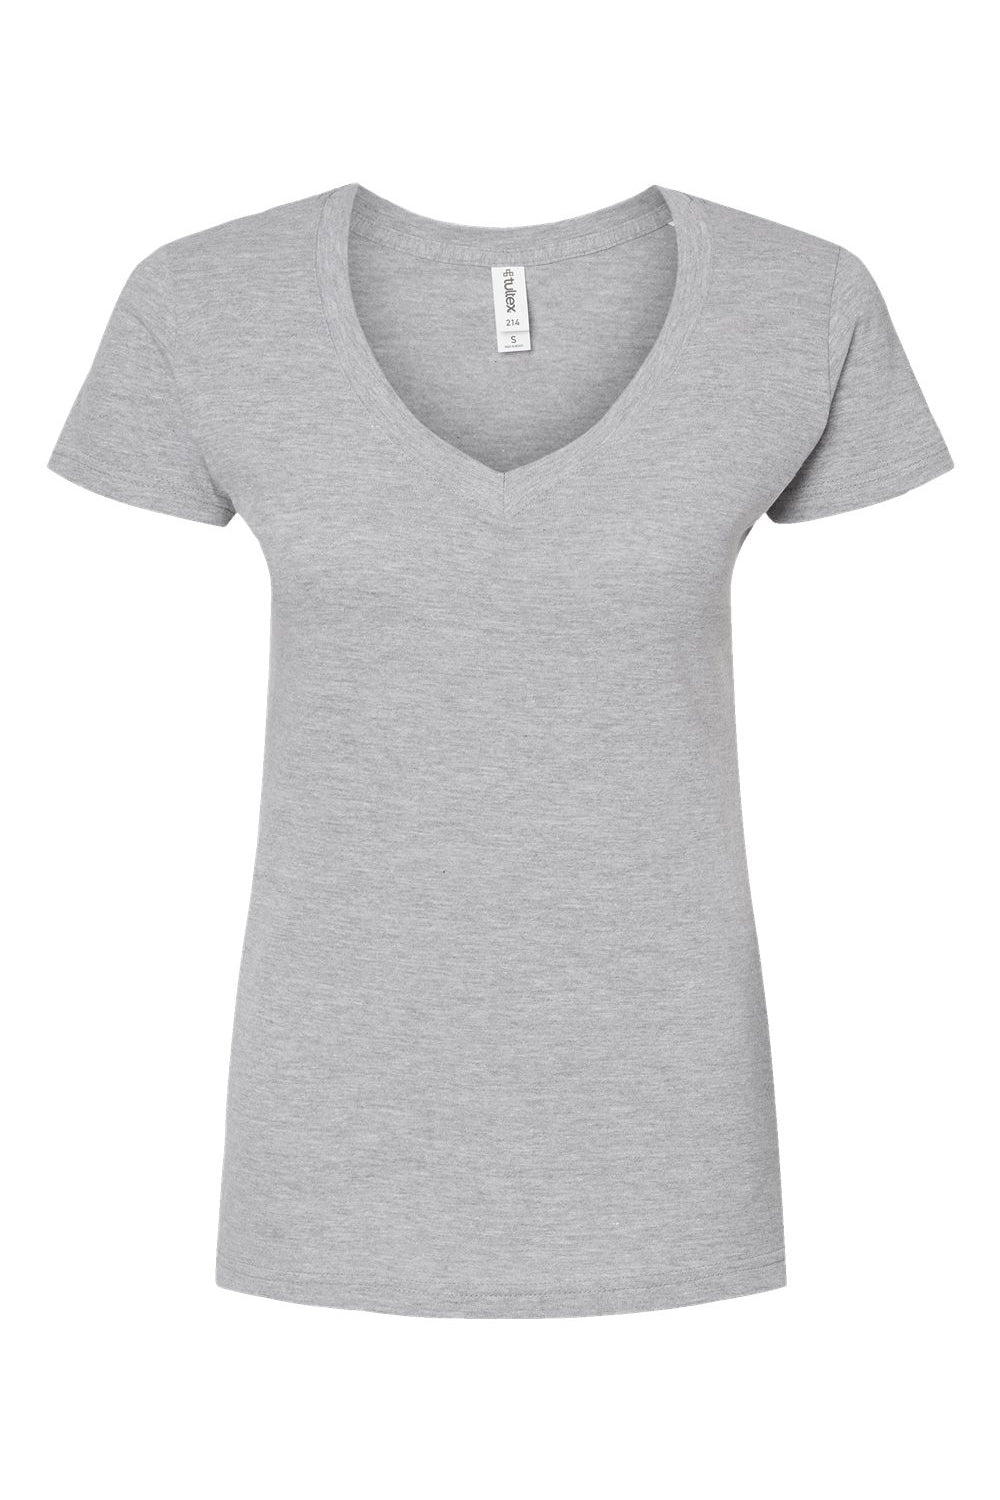 Tultex 214 Womens Fine Jersey Short Sleeve V-Neck T-Shirt Heather Grey Flat Front